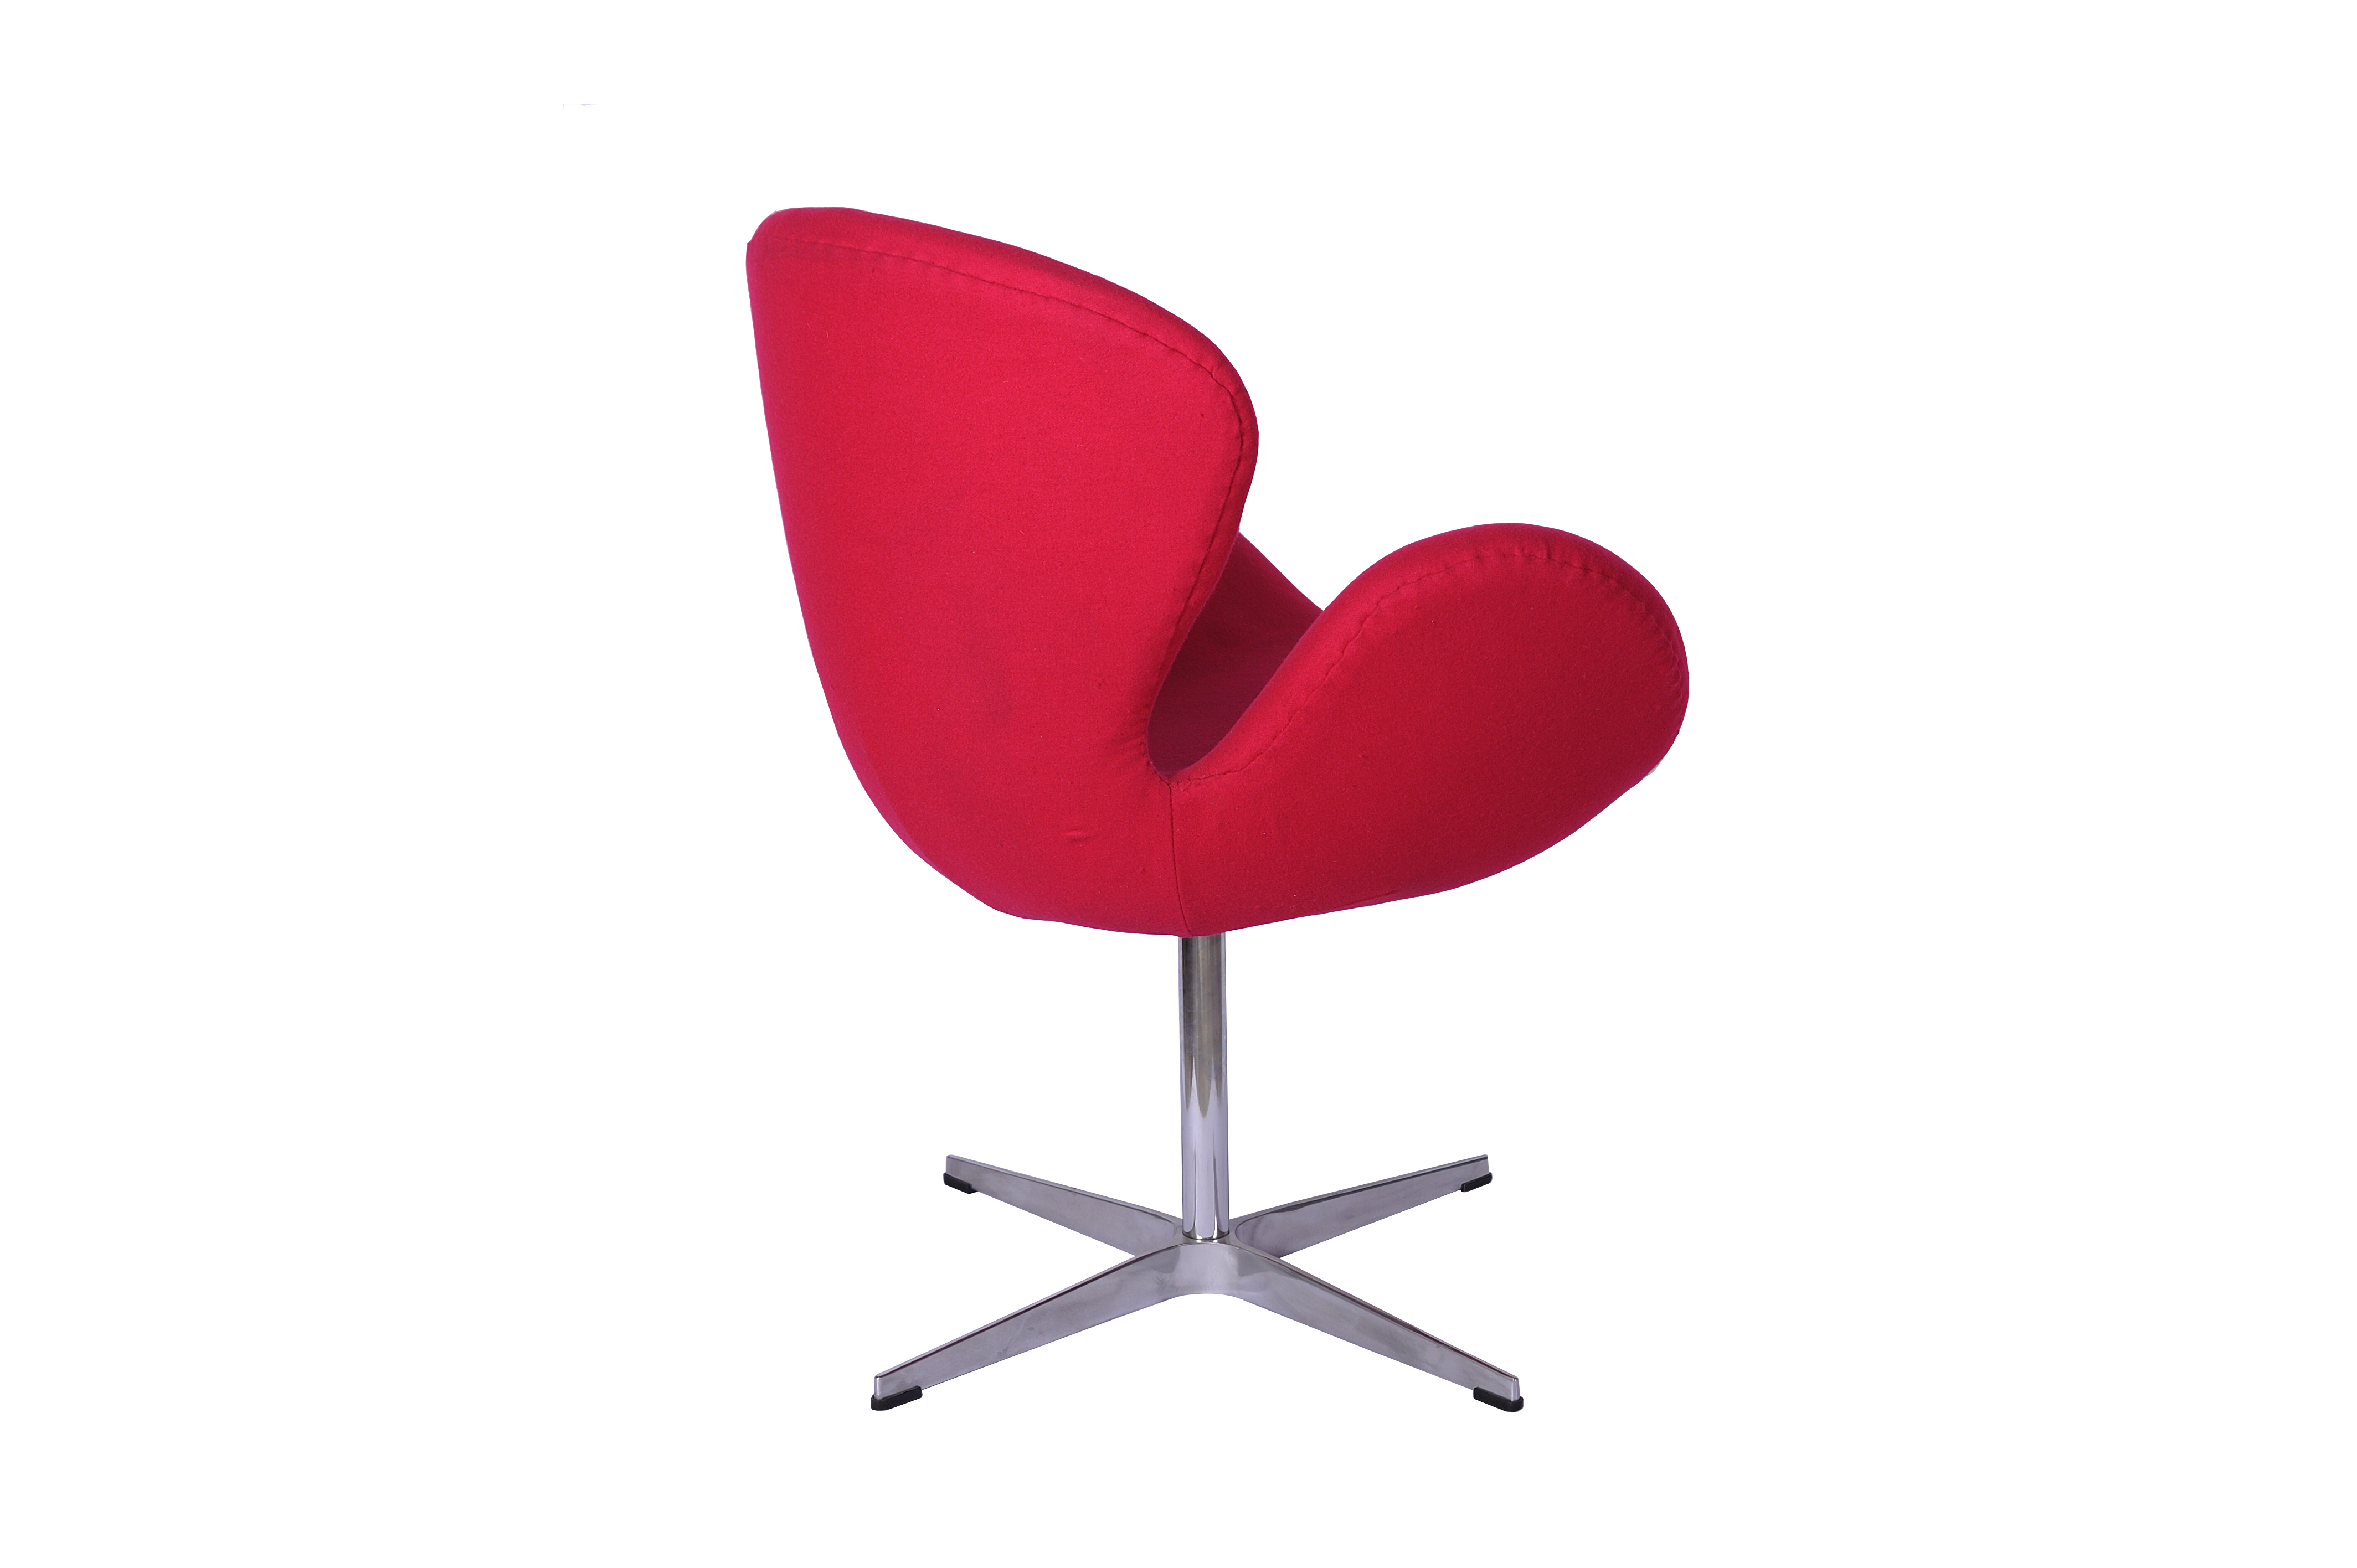 Tengye TENGYE Nordic Swan Chair Classic Office Leisure Chair Creative Fashion Leisure Negotiation Chair TY-402A